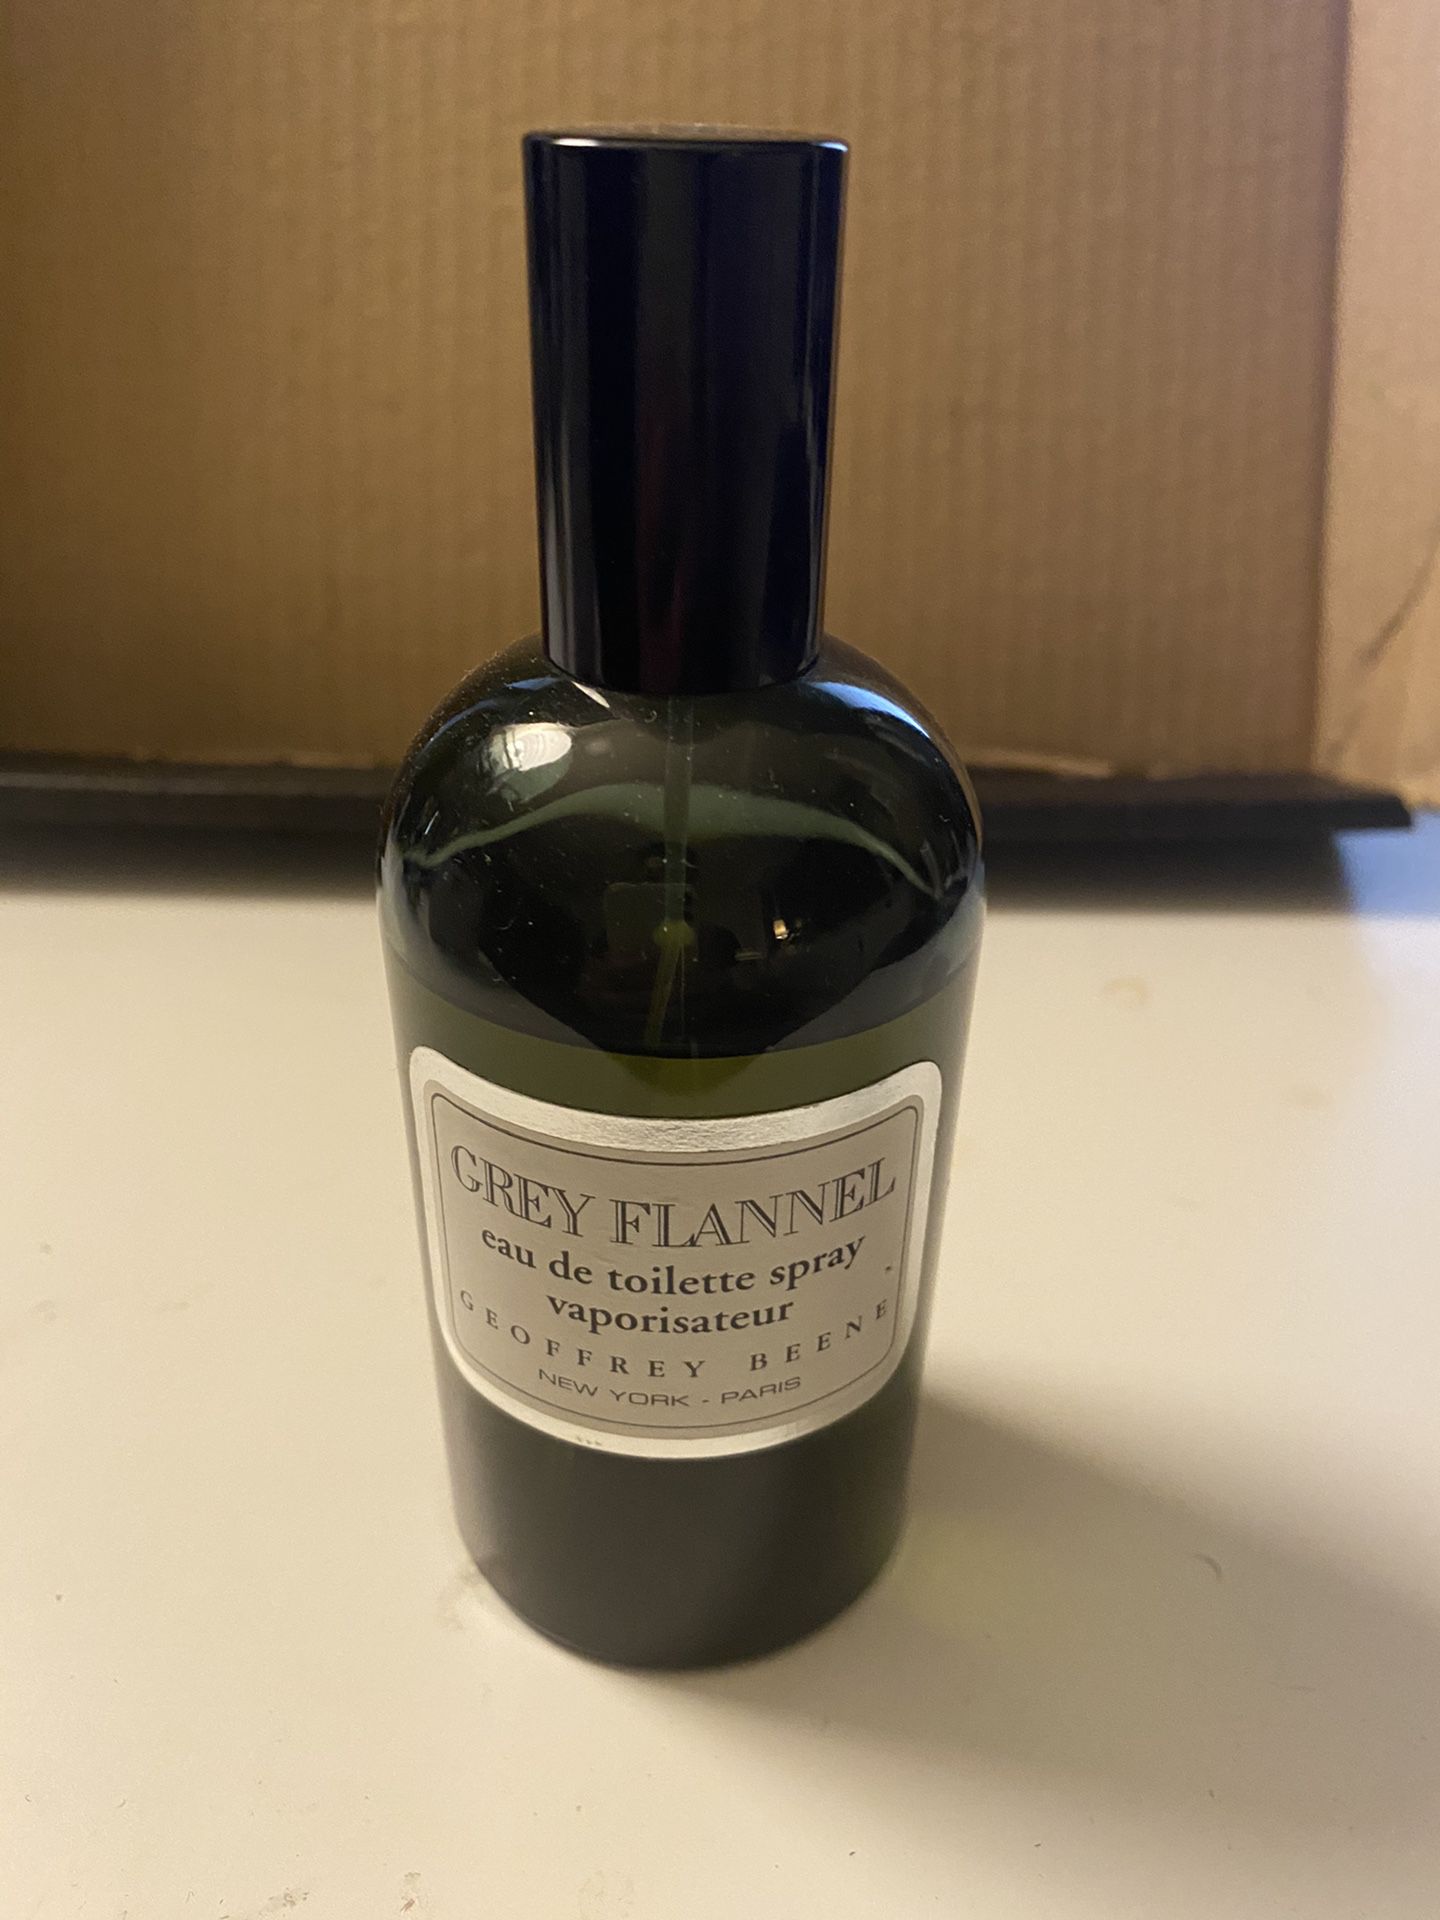 Grey flannel 120 ml men’s cologne